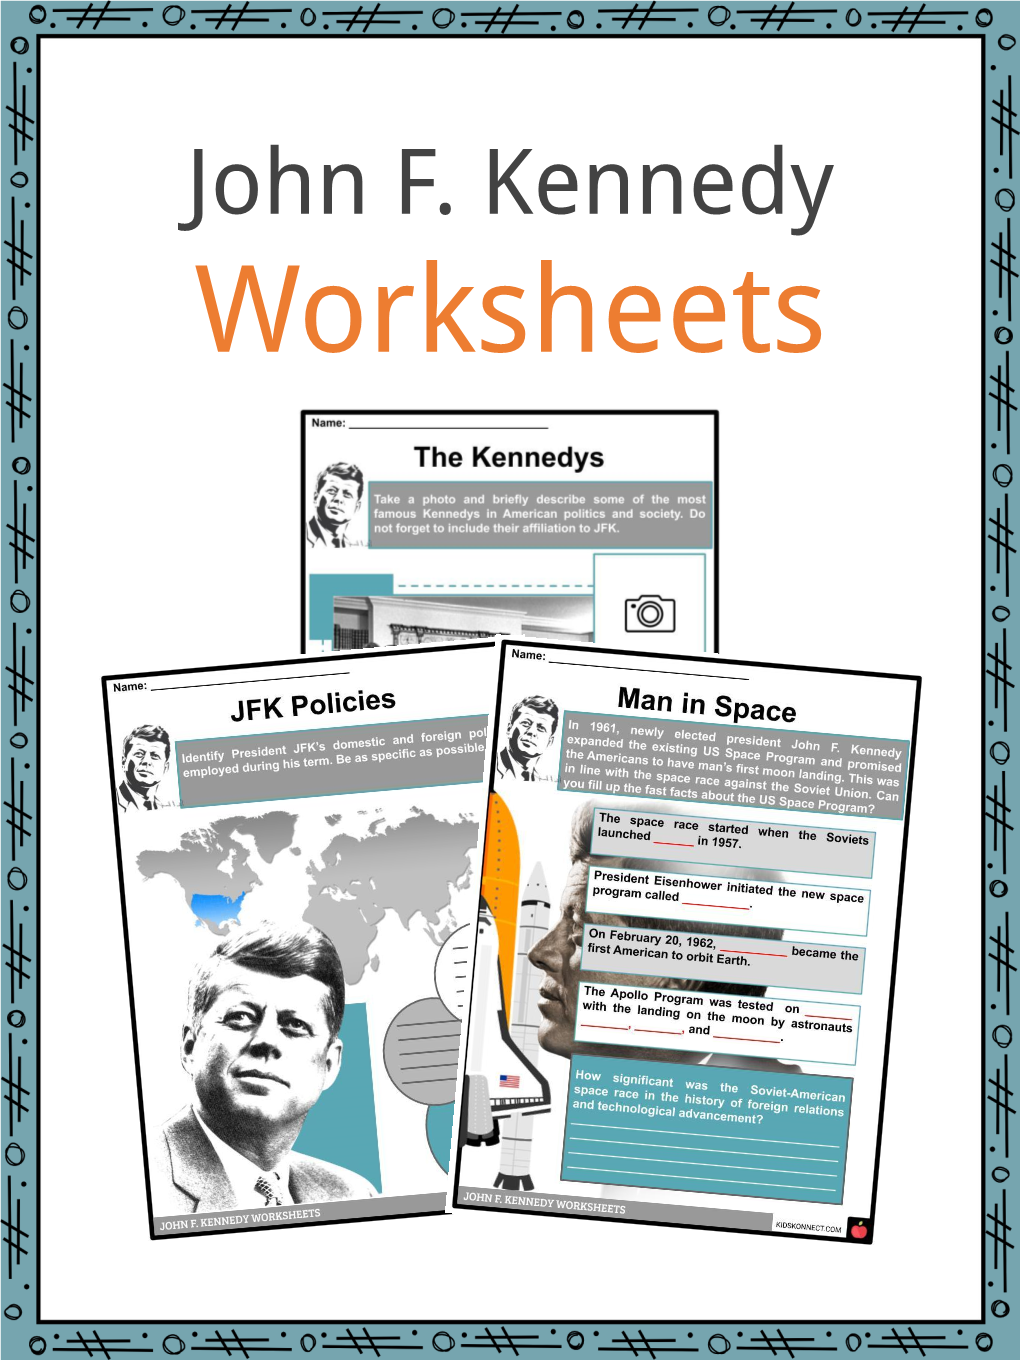 John F. Kennedy Facts